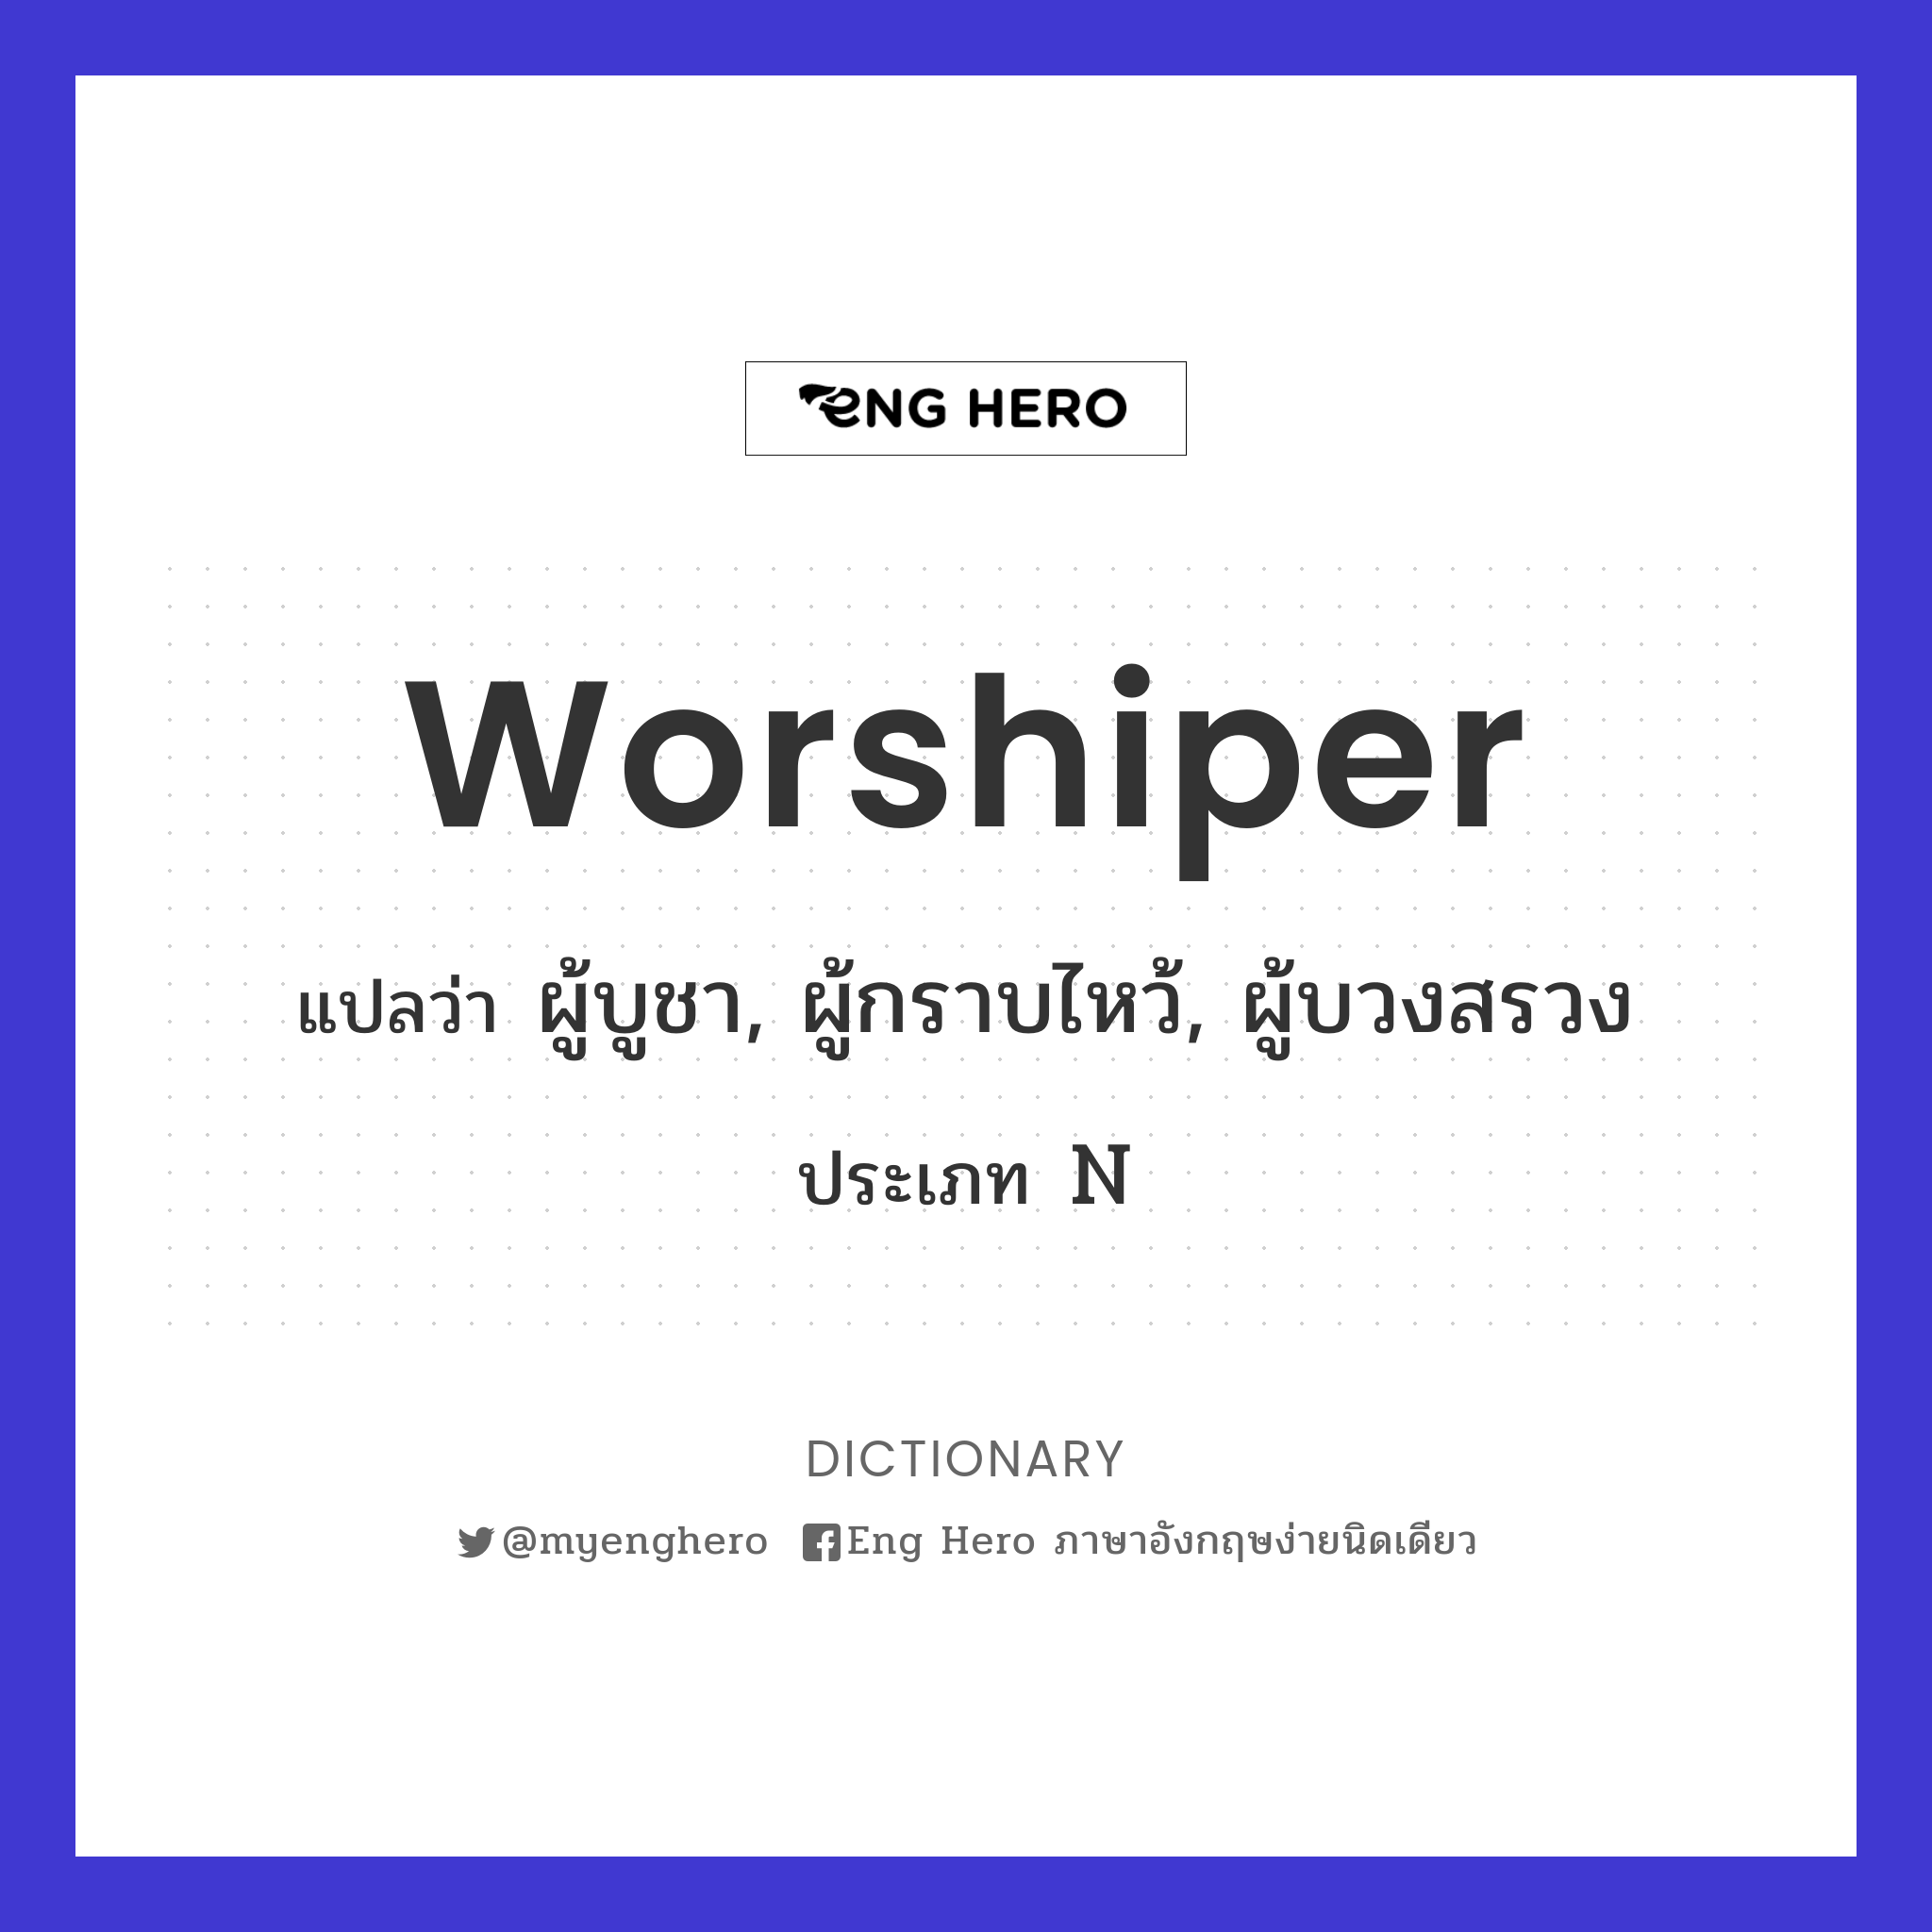 worshiper